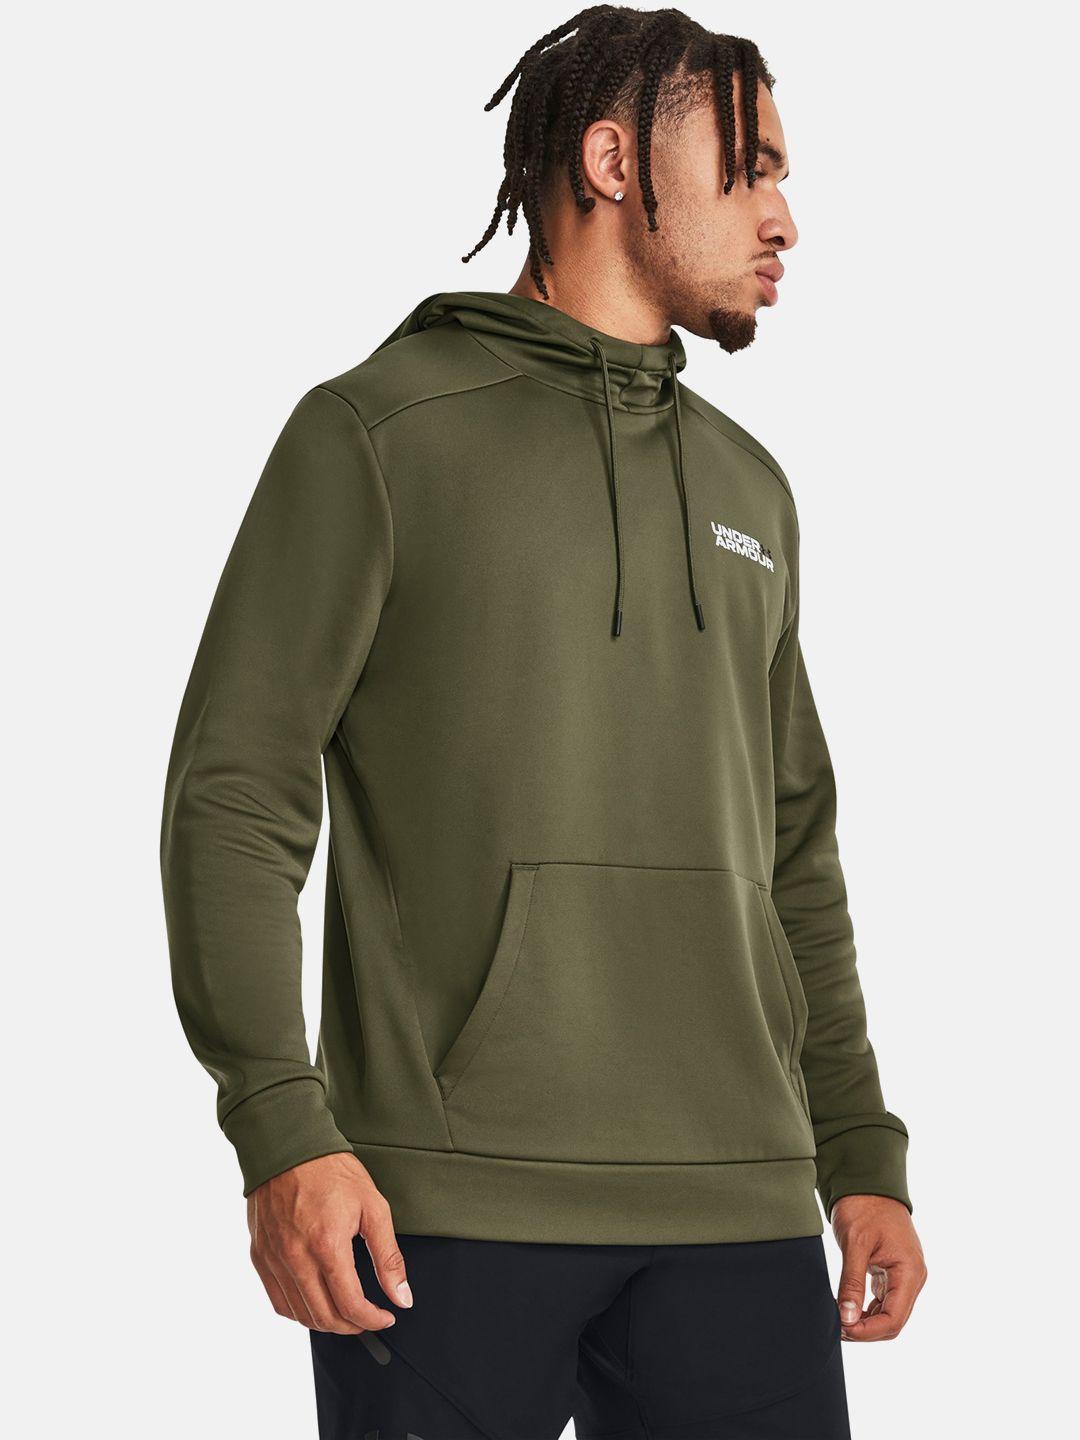 under armour fleece(r) graphic brand logo printed hooded sweatshirt